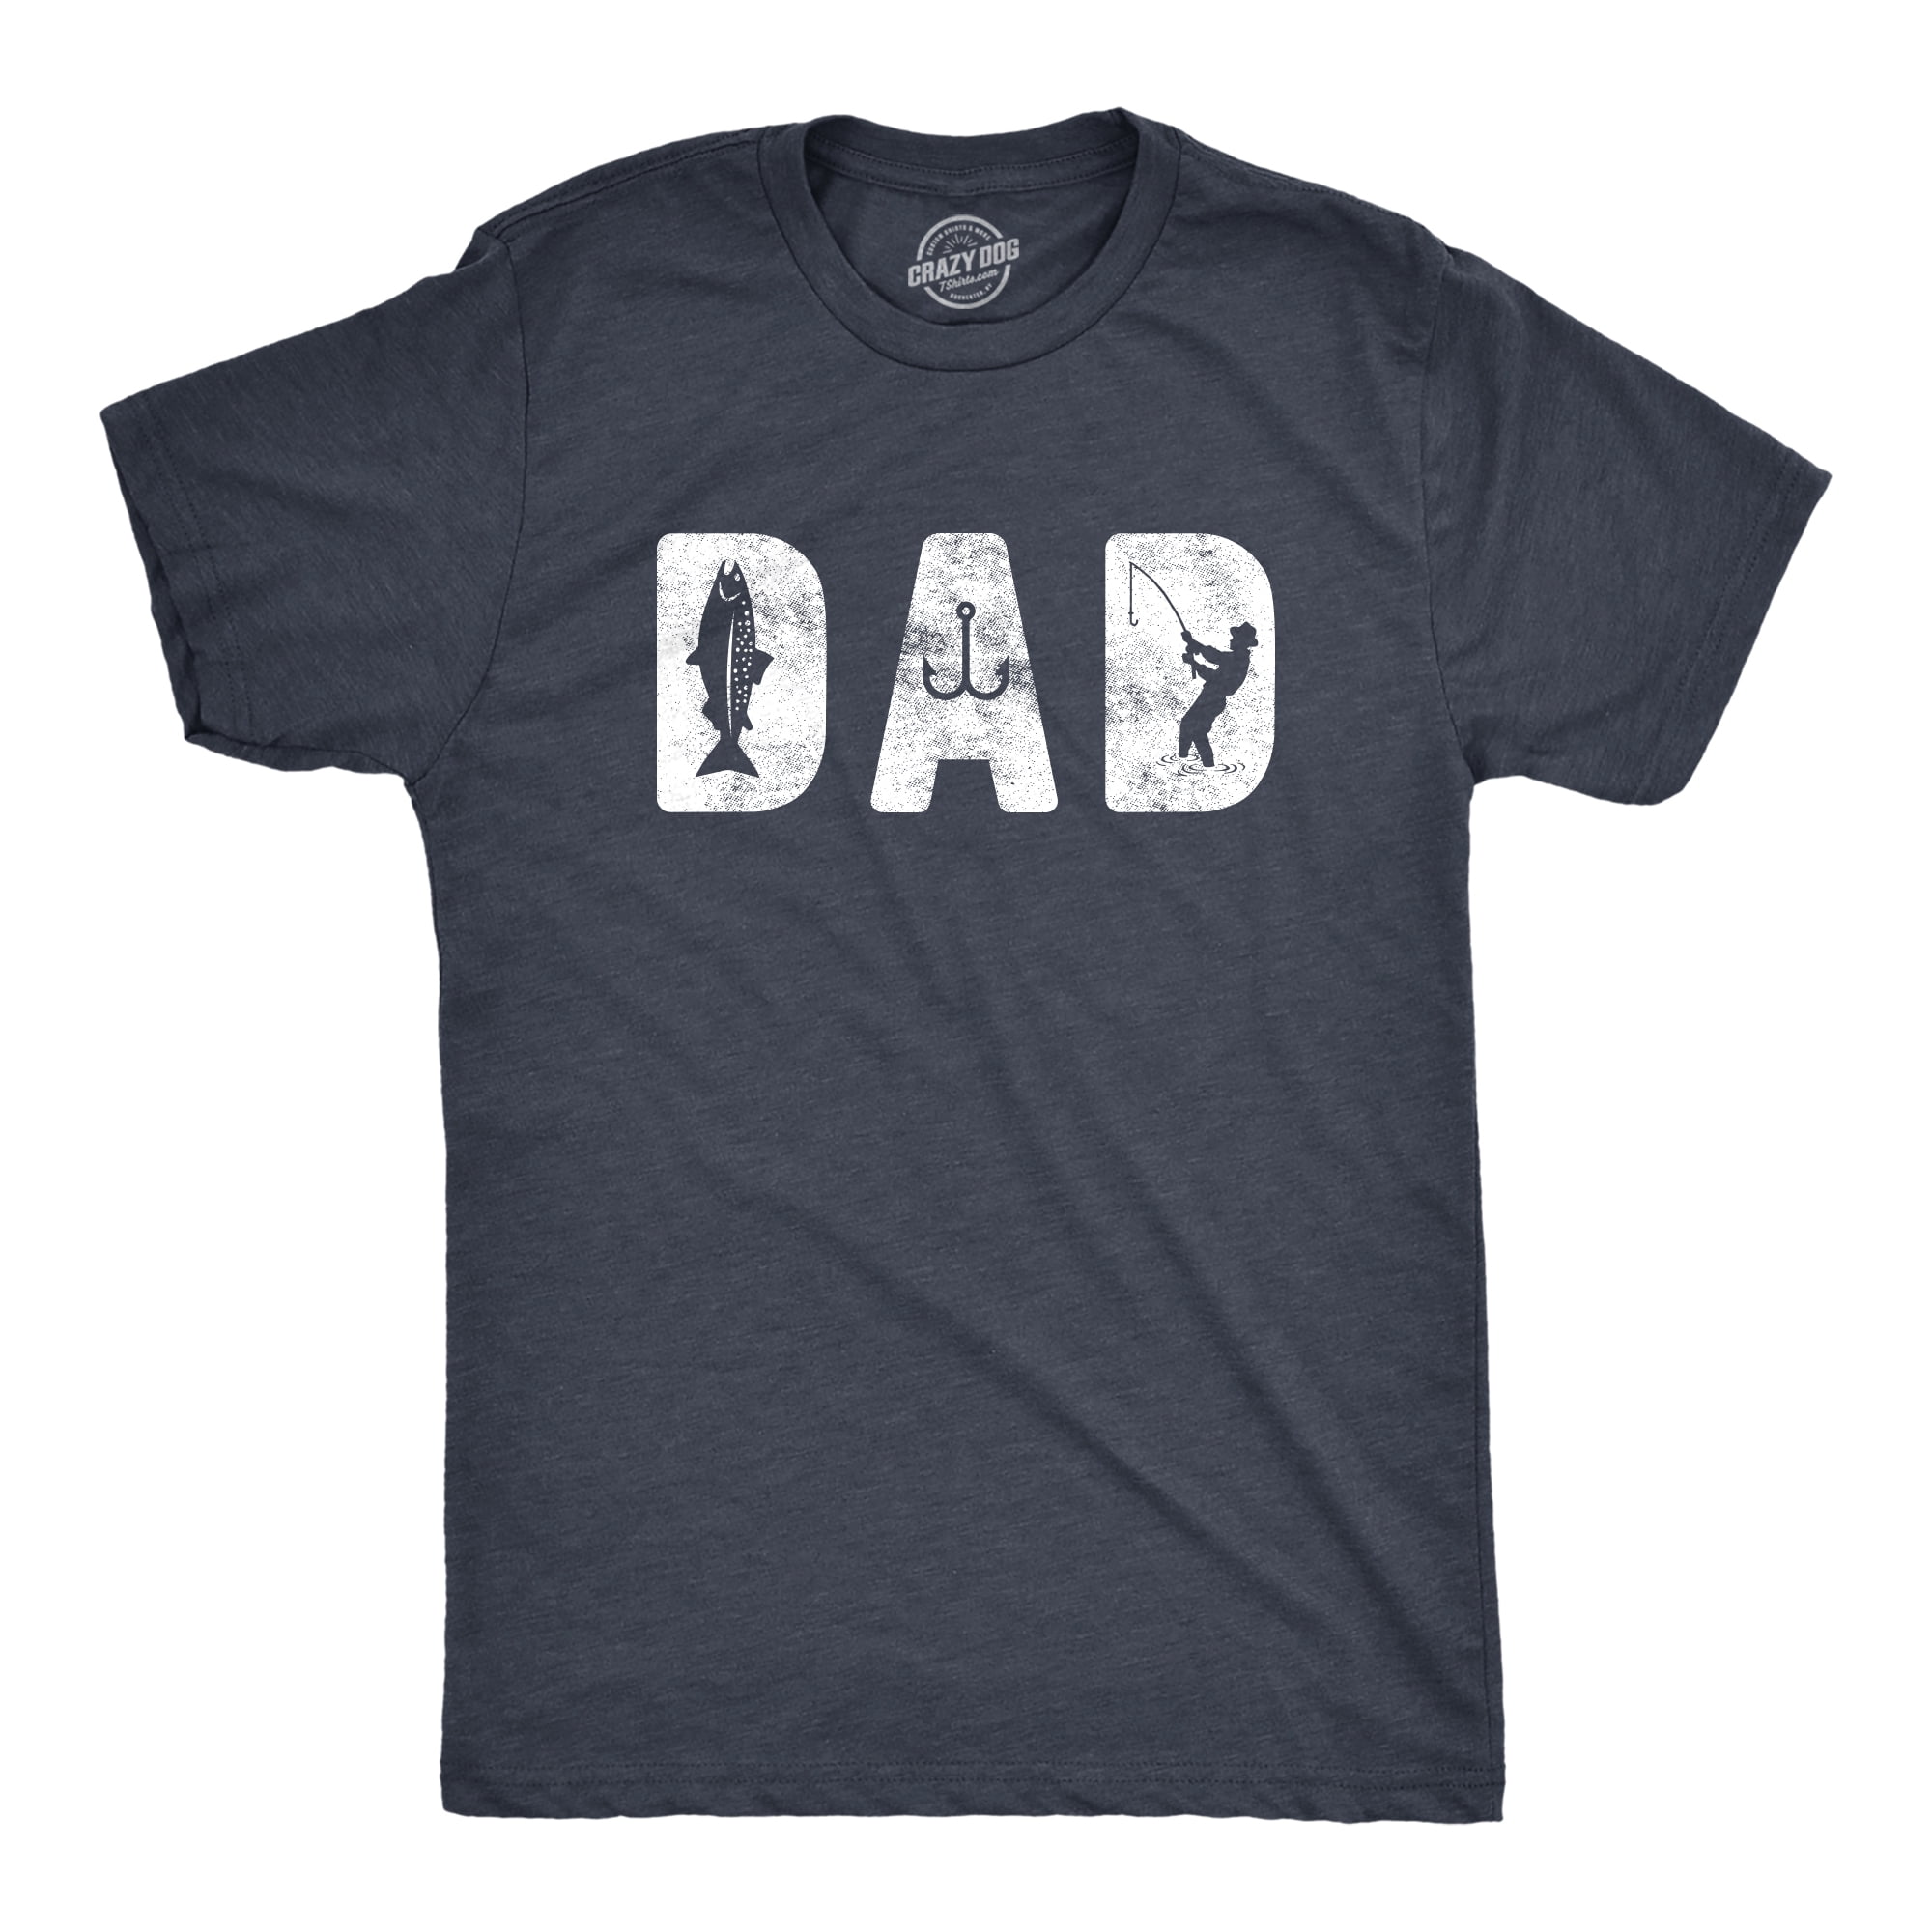 Dad Fishing Shirt, Fishing T-shirt, Fishing Lover, Fisherman Shirt, Fathers  Day Gift, Gift for Him, Gifts for Men, Mens Shirts, Gift for Dad 